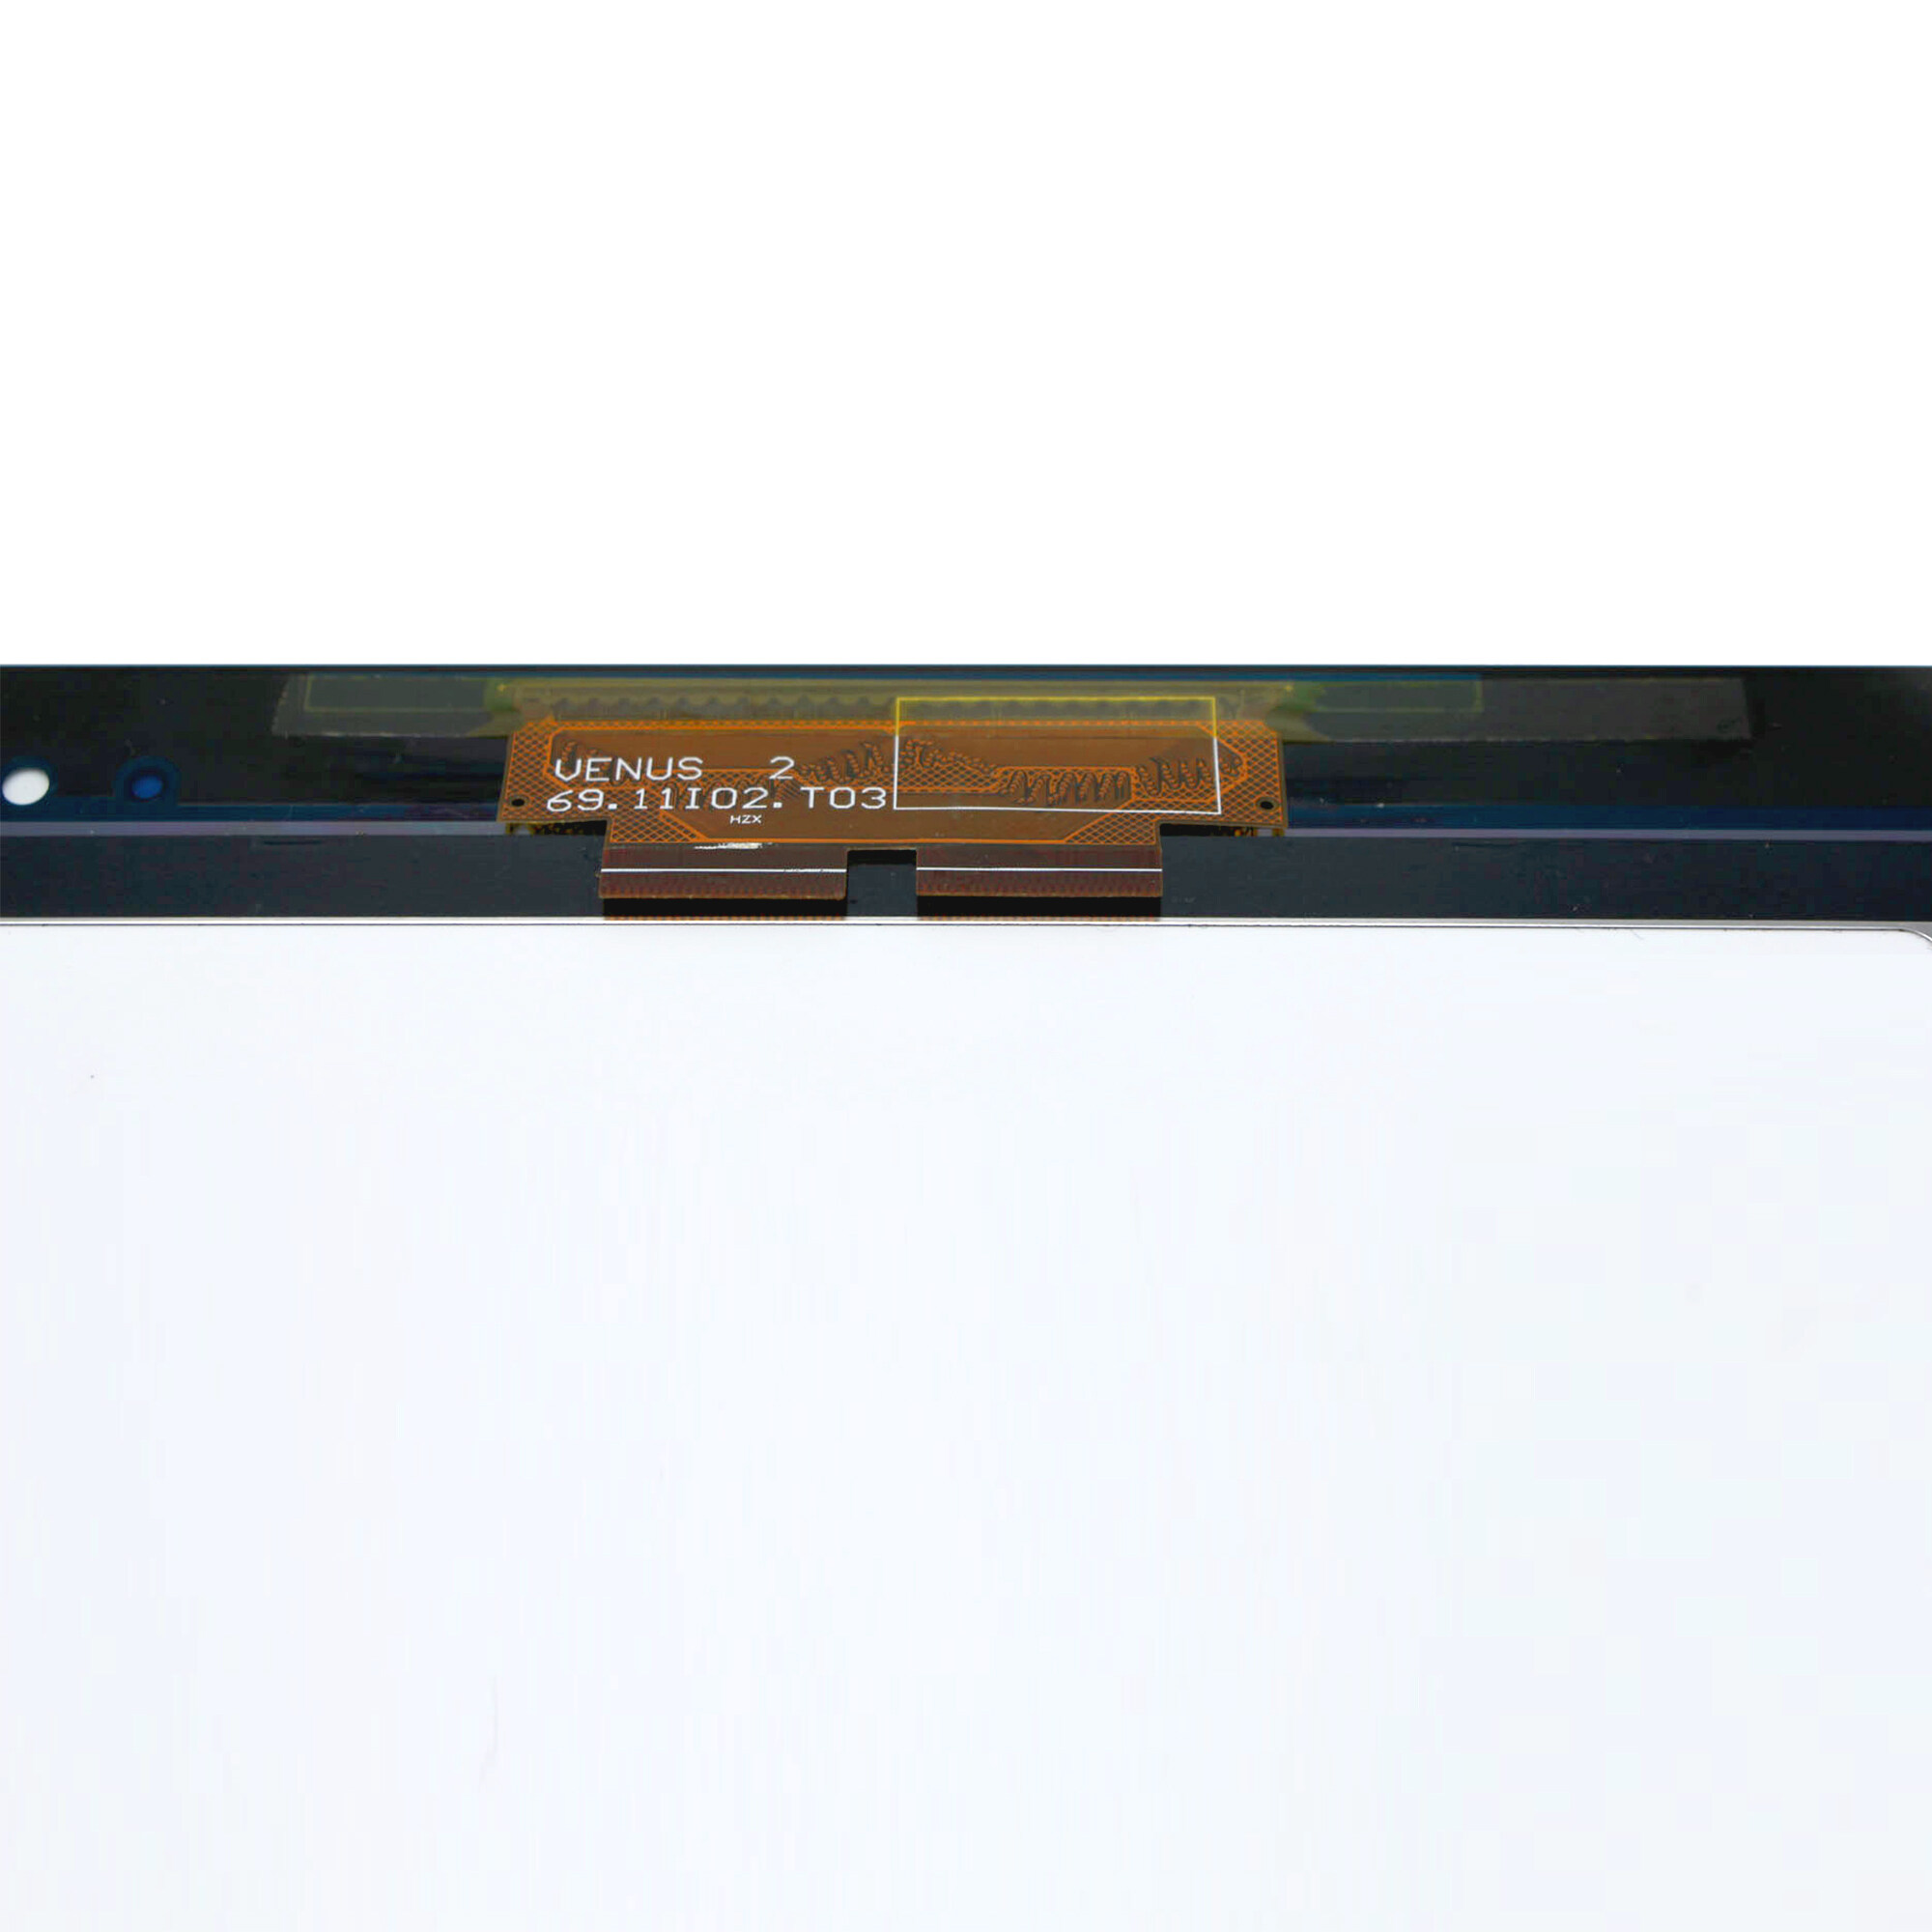 11.6" B116XAT02.0 LCD Touch Screen Display + Bezel for LENOVO IDEAPAD YOGA 11 20332